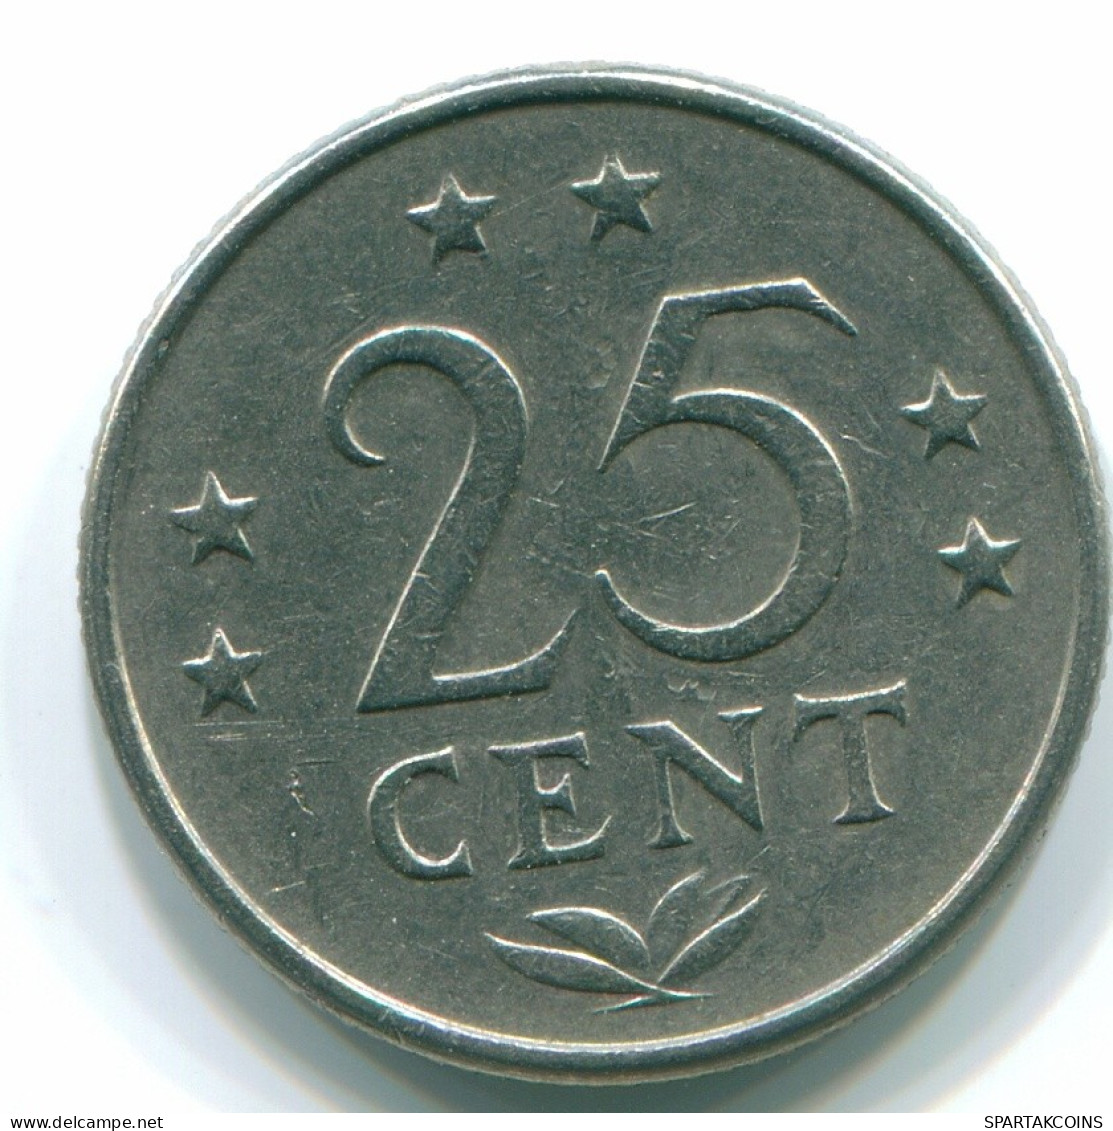 25 CENTS 1970 NIEDERLÄNDISCHE ANTILLEN Nickel Koloniale Münze #S11431.D.A - Netherlands Antilles